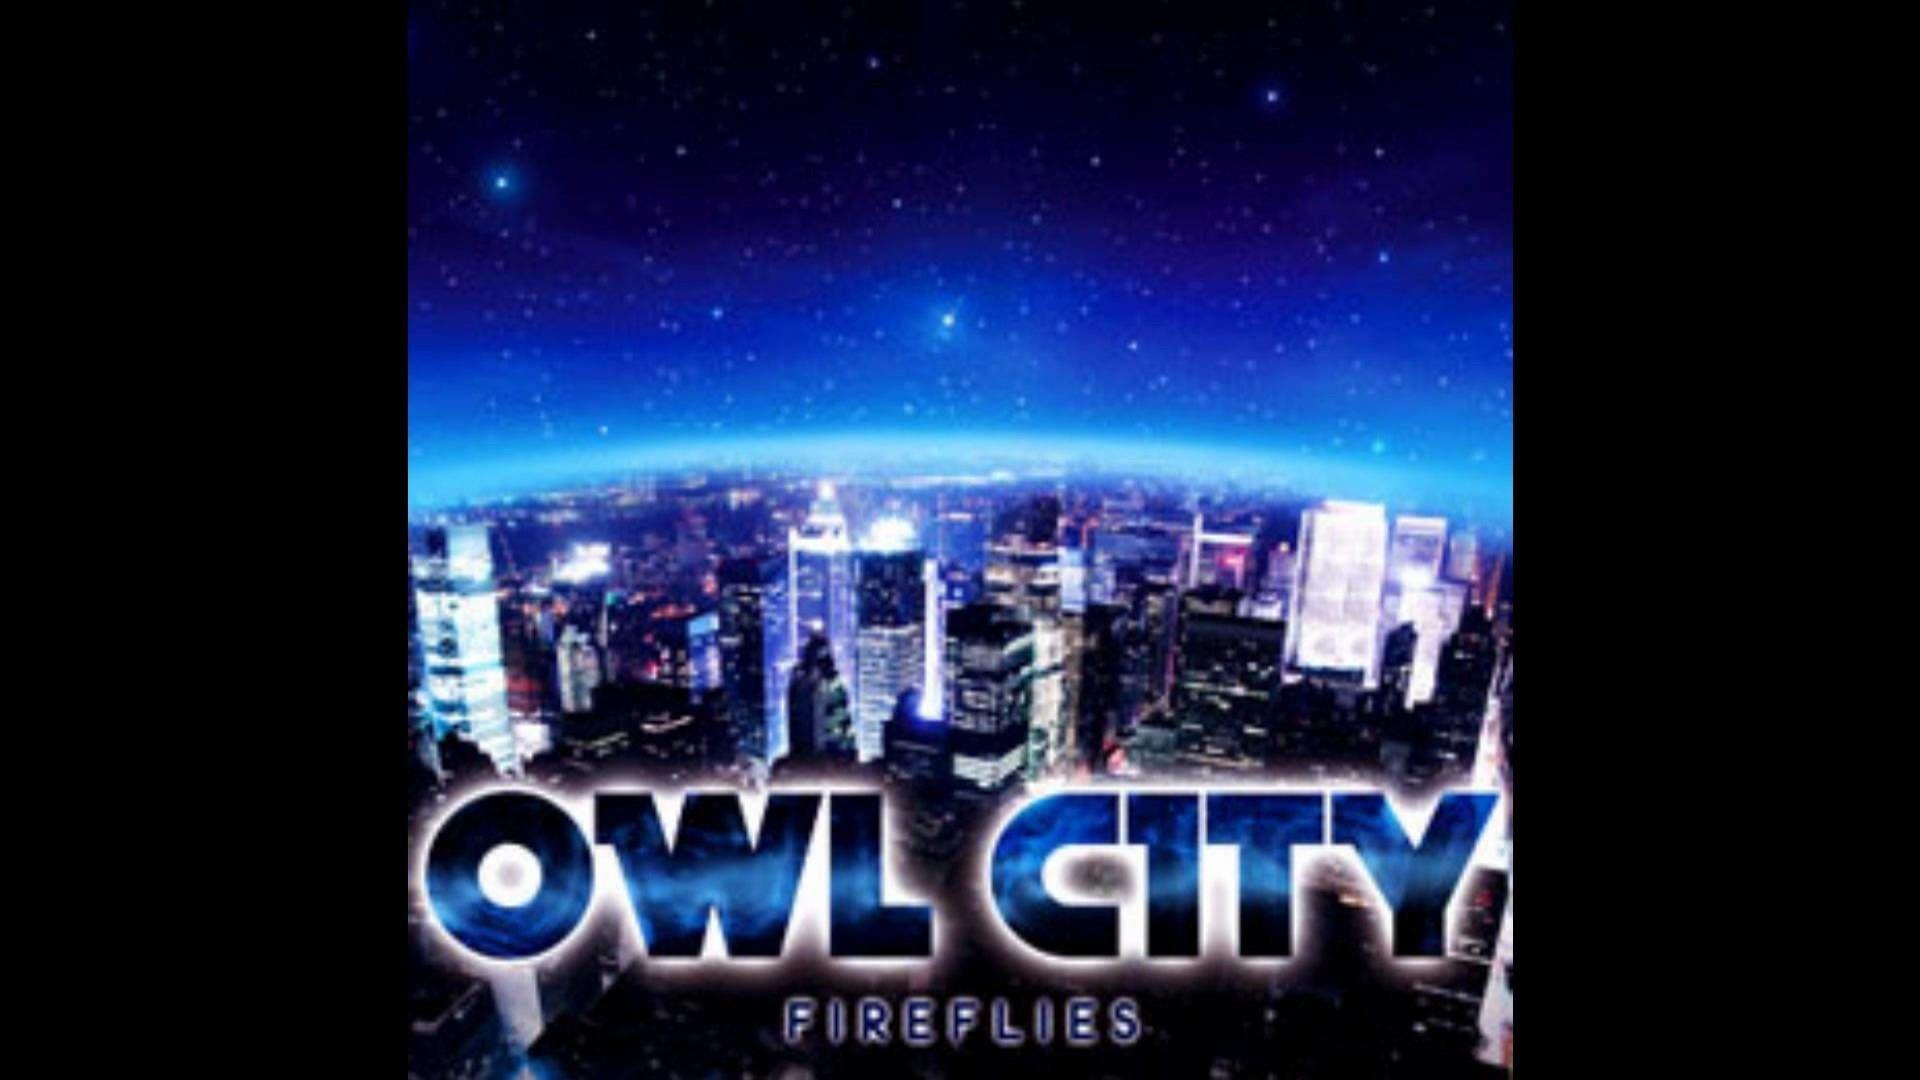 Owl City Wallpaper